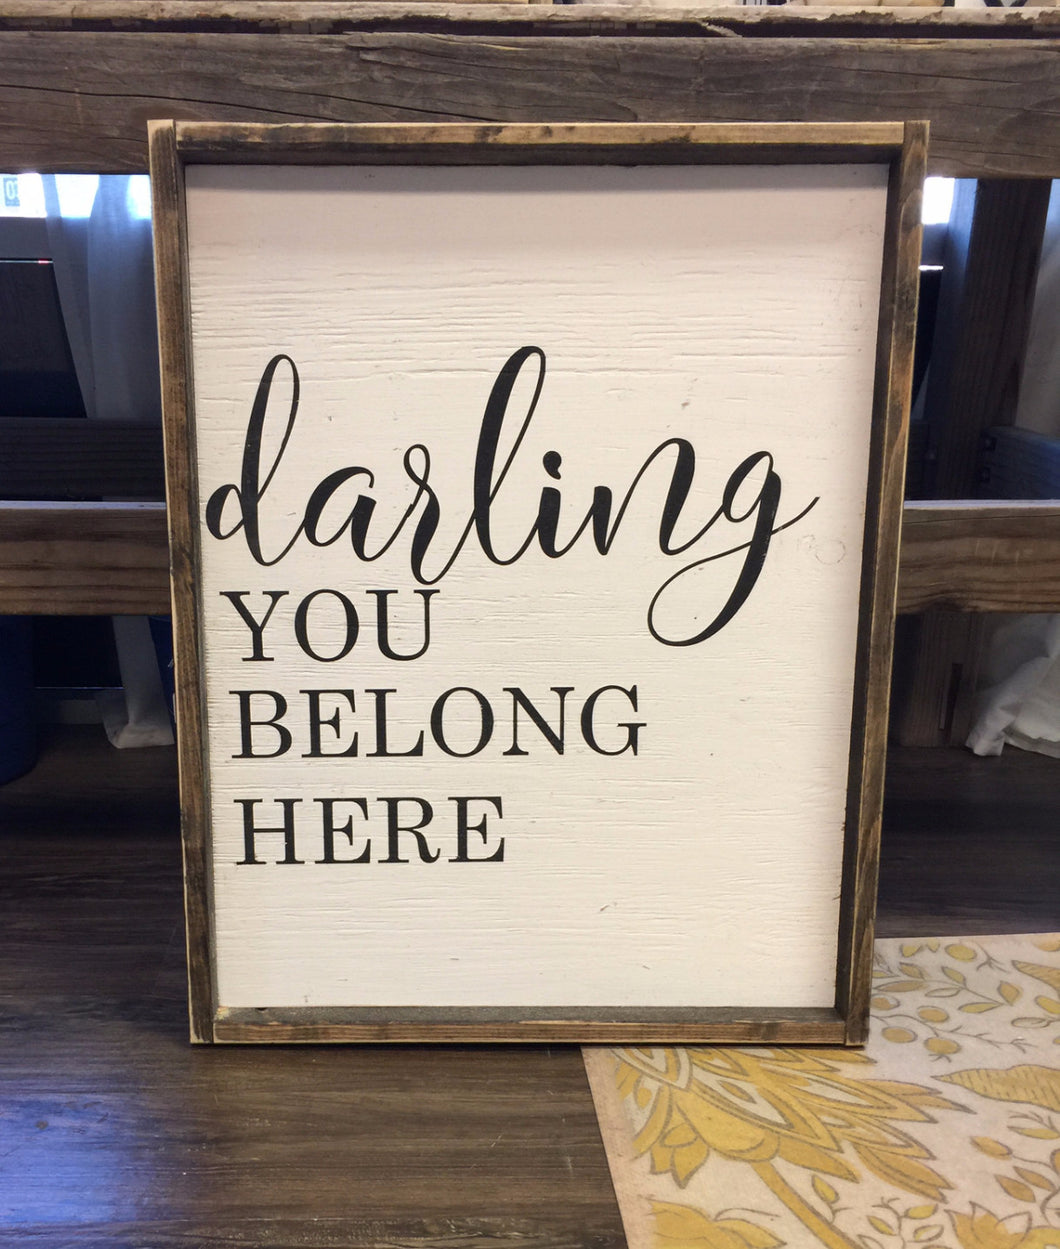 Darling you belong here